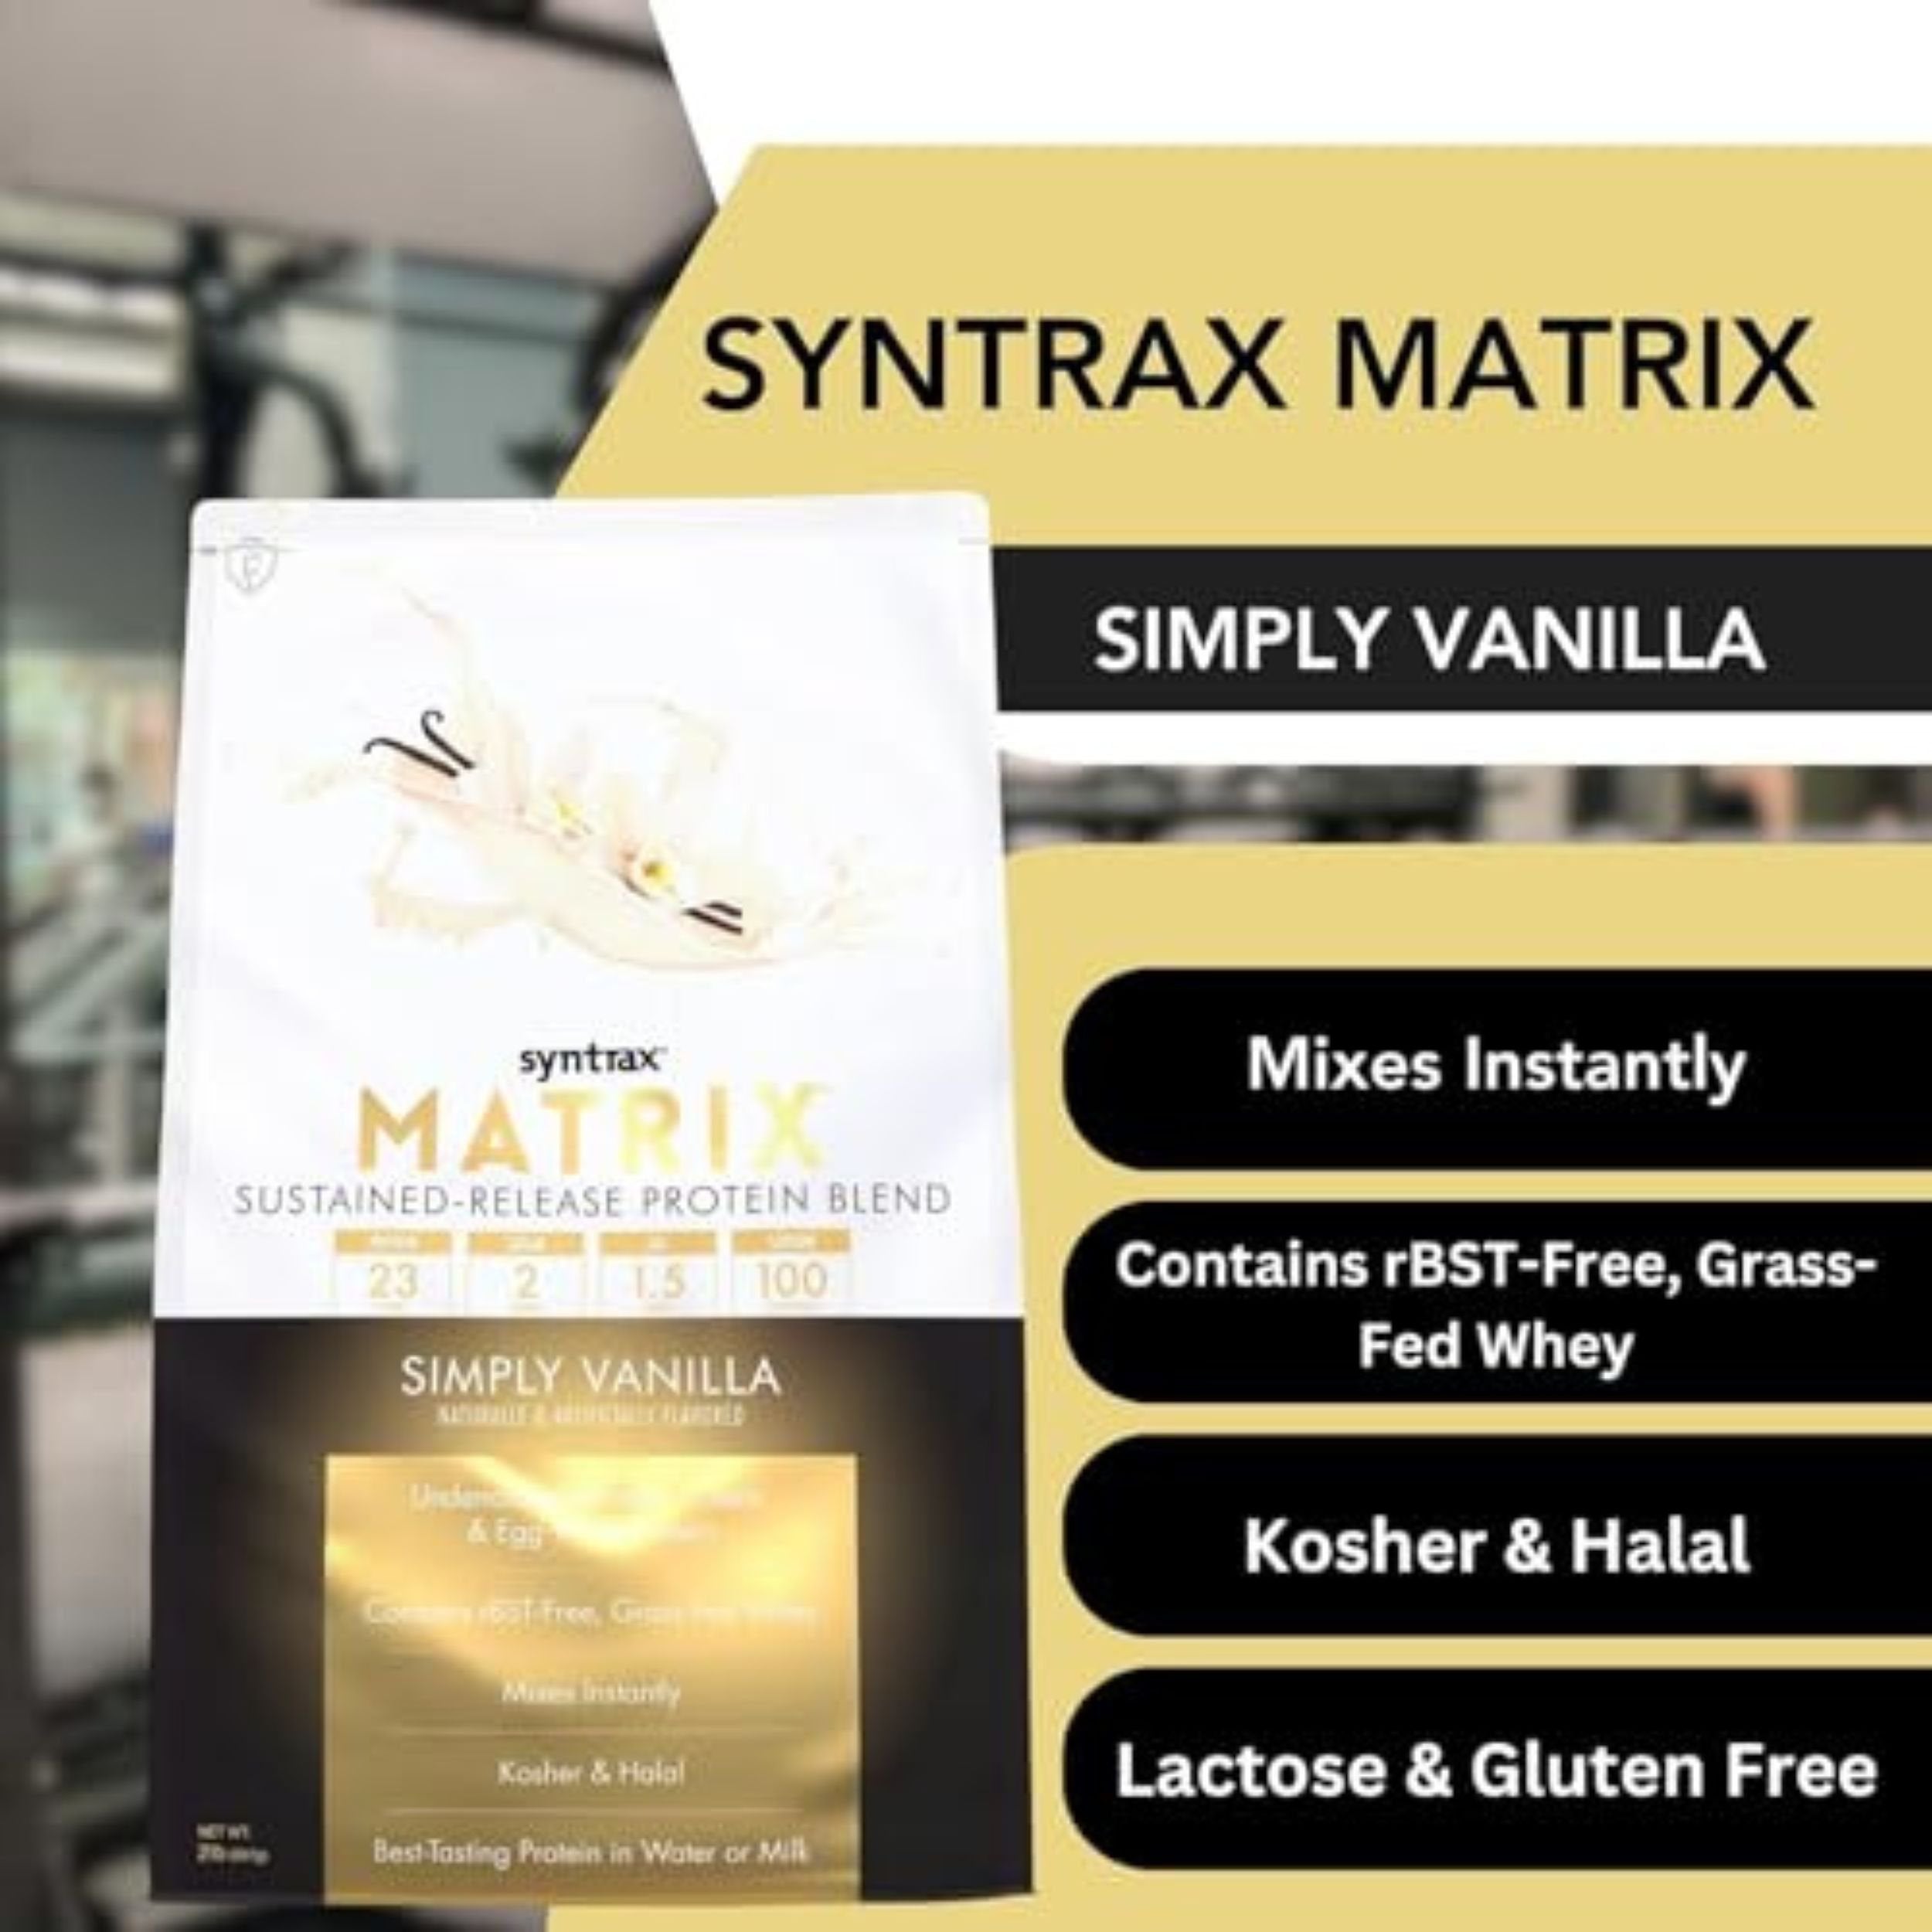 Syntrax Bundle, 2 Items Matrix Protein Powder 5.0 Sustained-Release Casein Protein and Whey Protein Powder - Instant Mix Simply Vanilla Protein Powder Flavor, 2lbs with Worldwide Nutrition Keychain